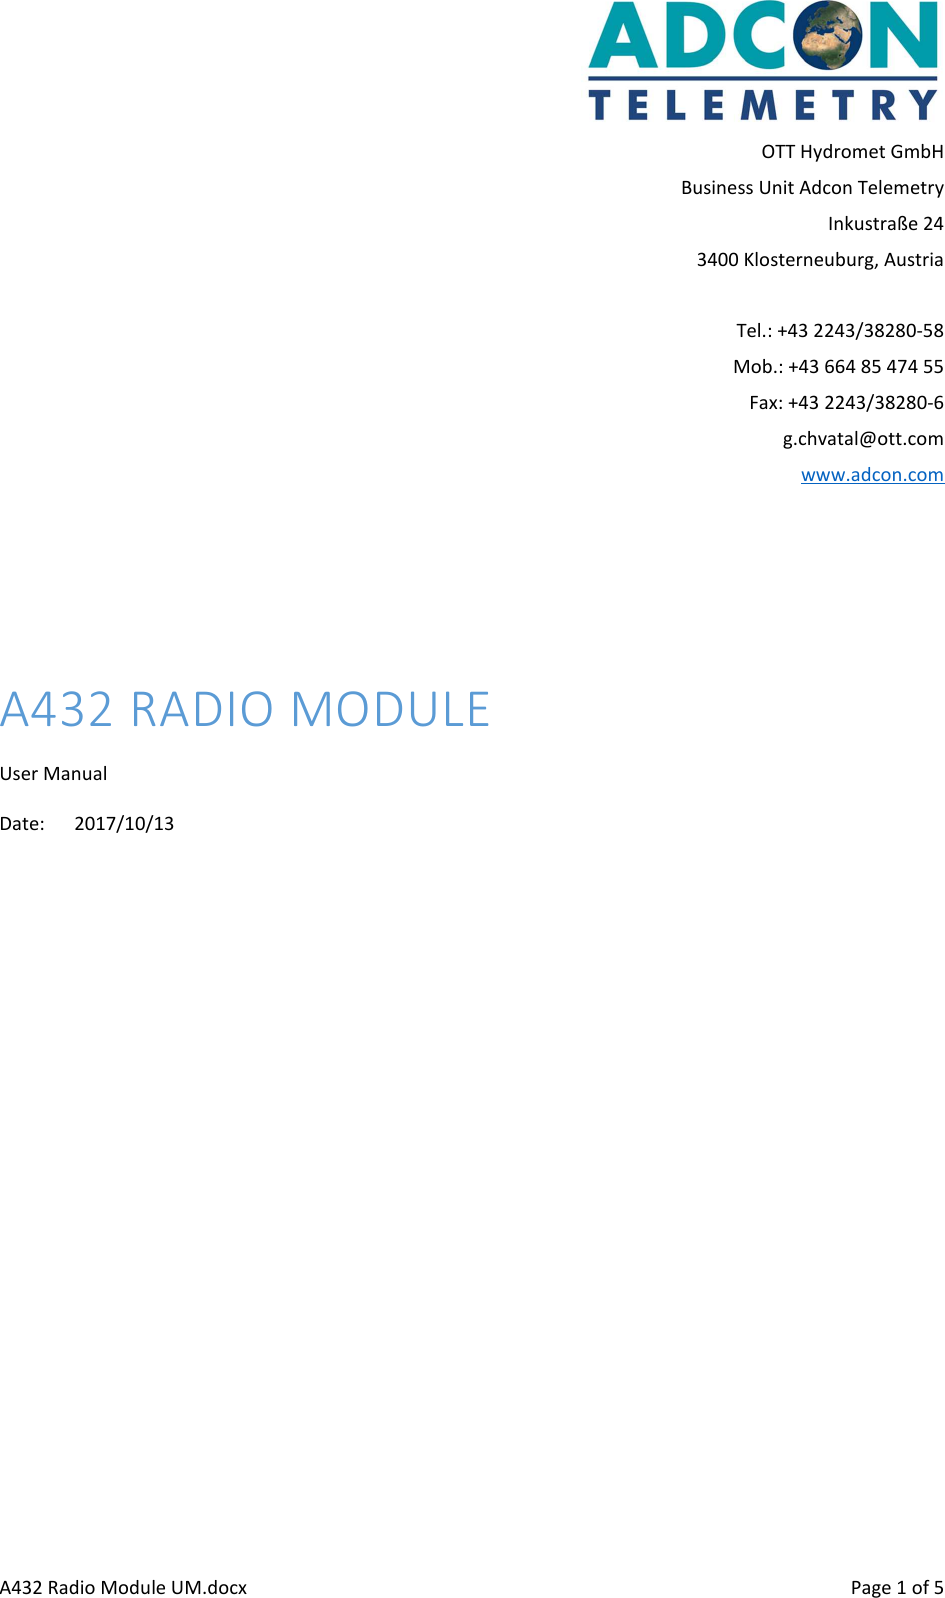      A432 Radio Module UM.docx    Page 1 of 5 OTT Hydromet GmbH Business Unit Adcon Telemetry Inkustraße 24 3400 Klosterneuburg, Austria  Tel.: +43 2243/38280-58 Mob.: +43 664 85 474 55 Fax: +43 2243/38280-6 g.chvatal@ott.com www.adcon.com    A432 RADIO MODULE User Manual Date:  2017/10/13    